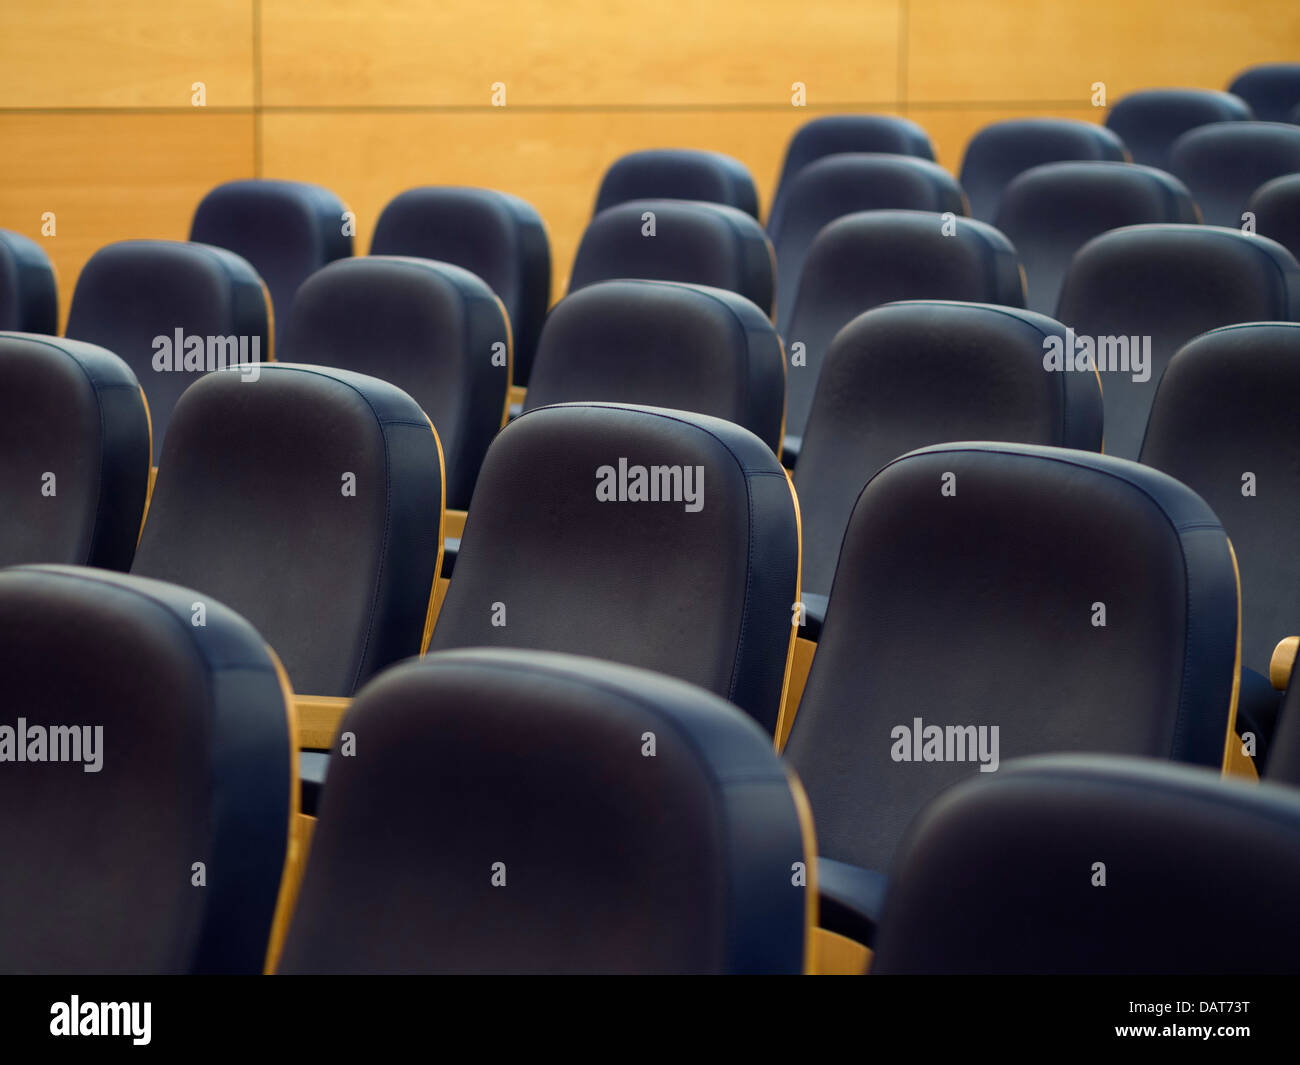 Rows of empty seats Stock Photo